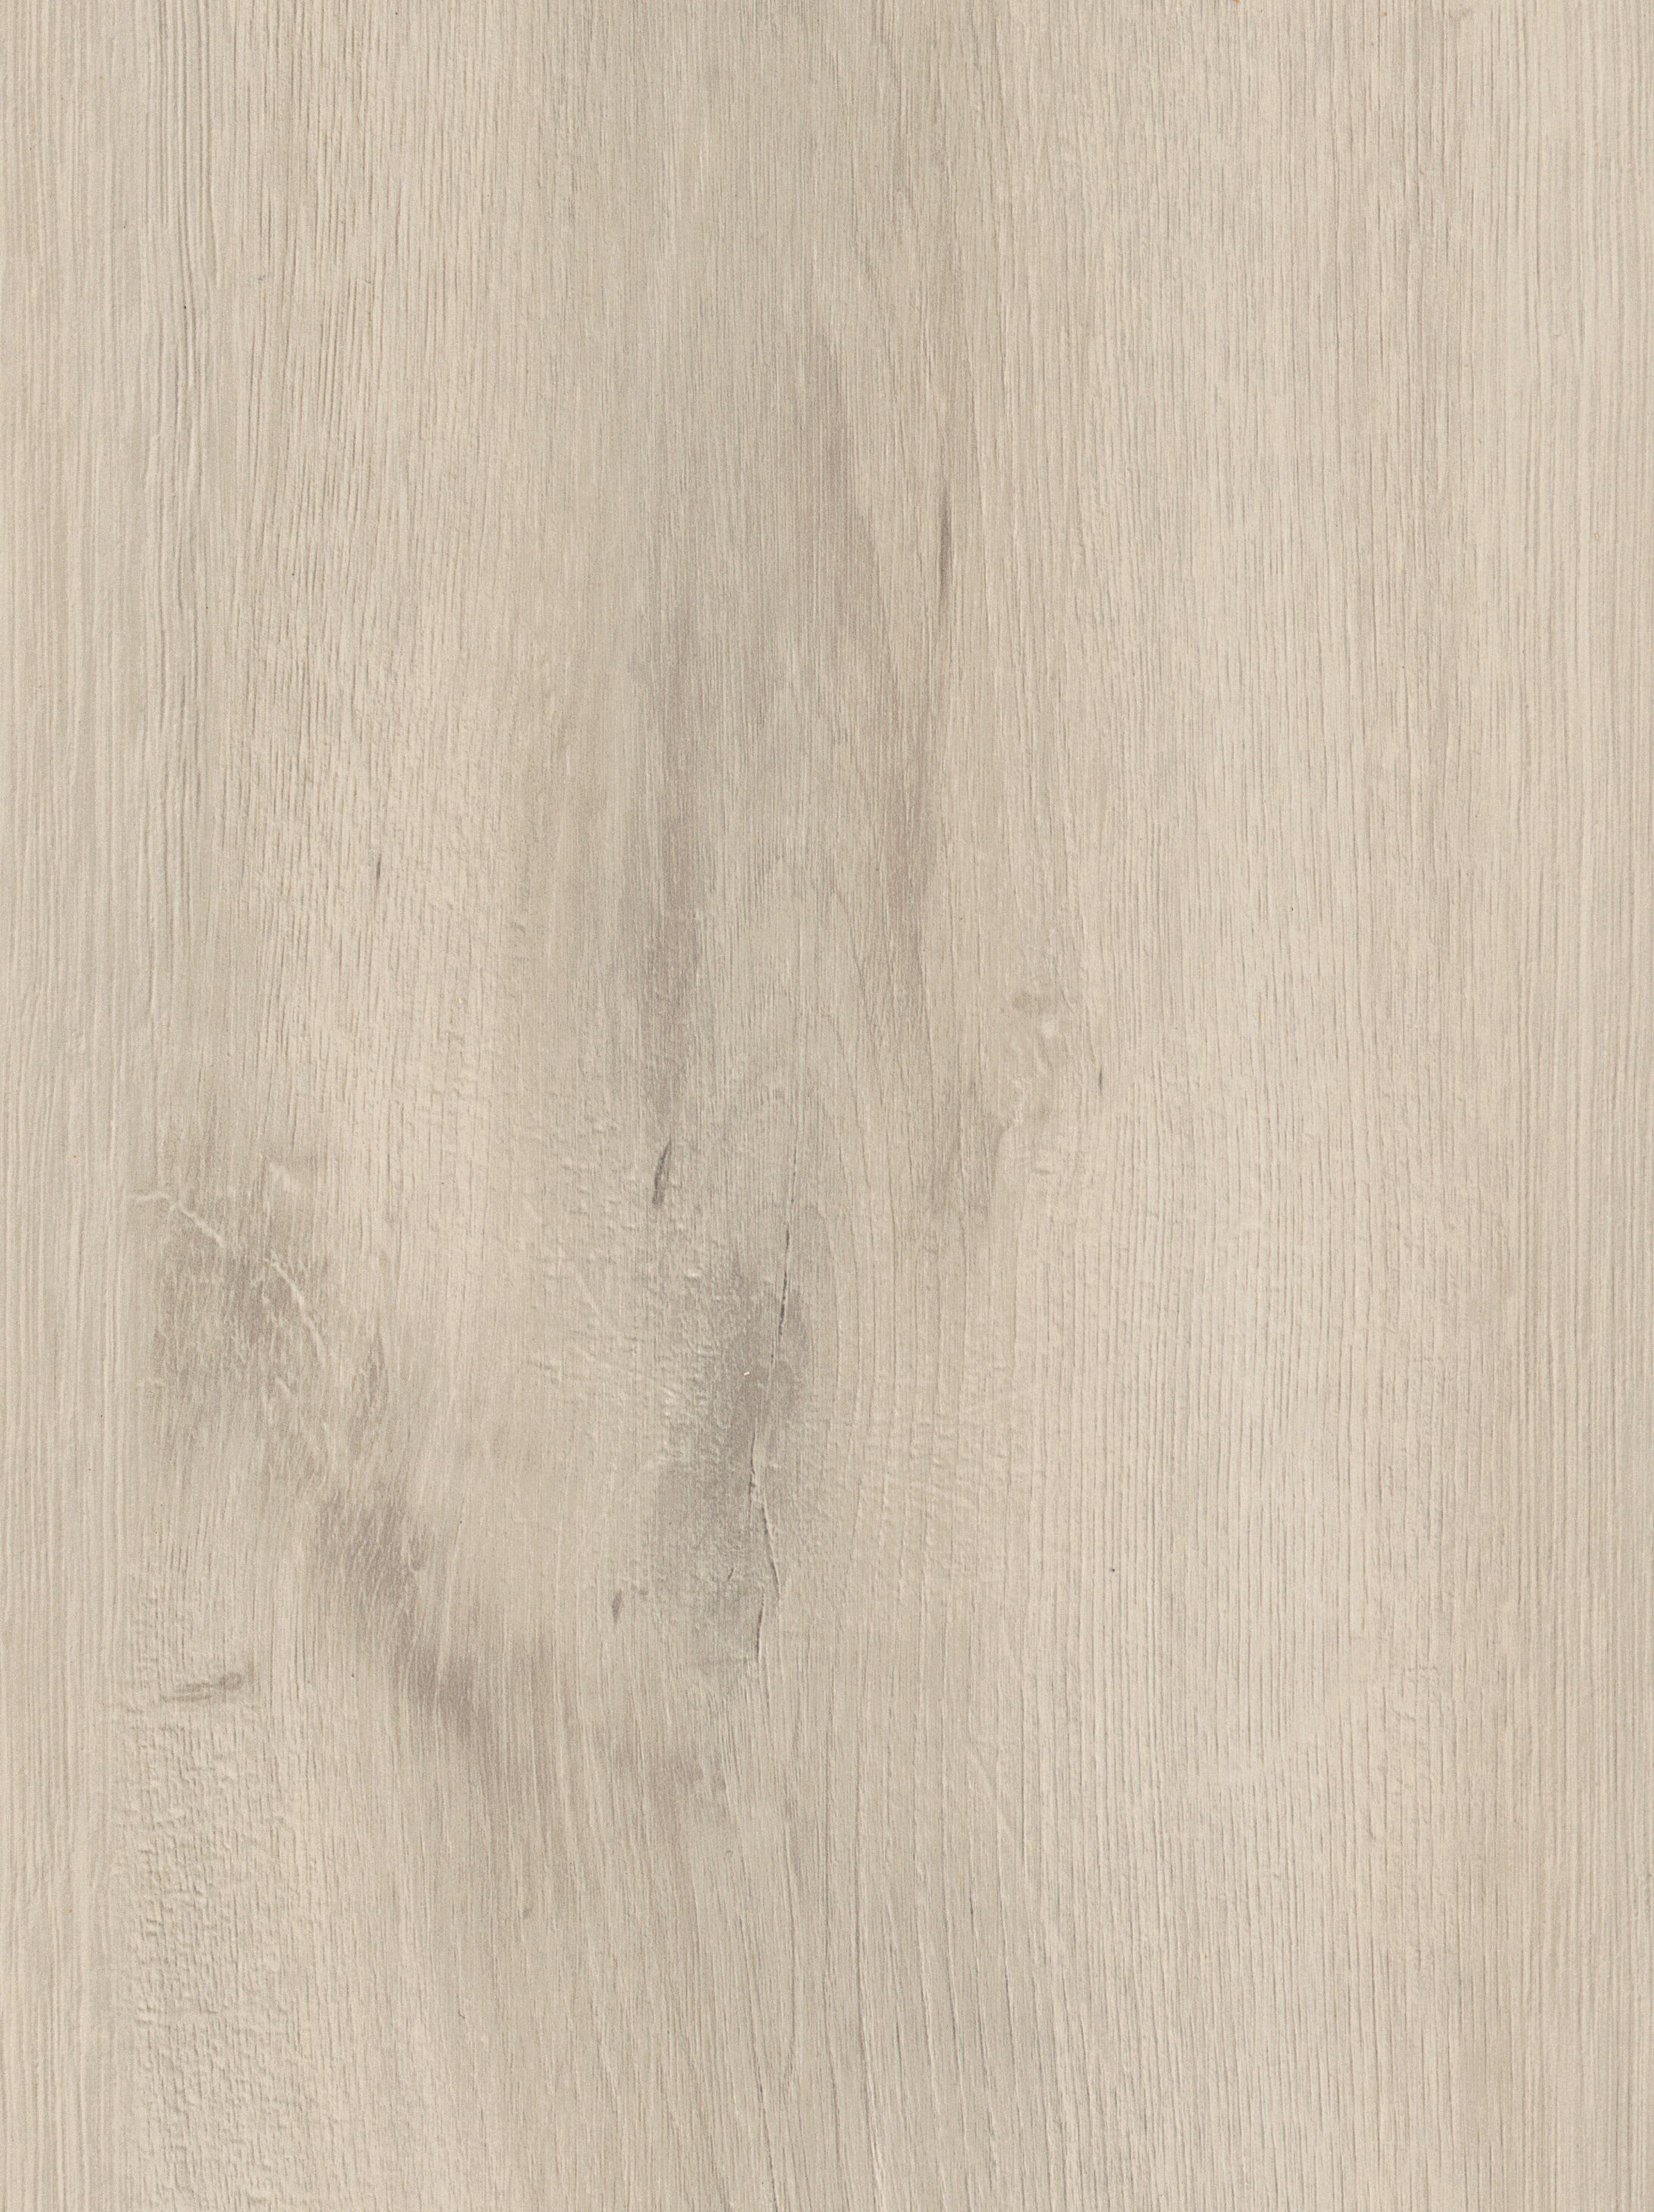 Berwick White Oak 12mm Moisture Resistant Laminate Flooring